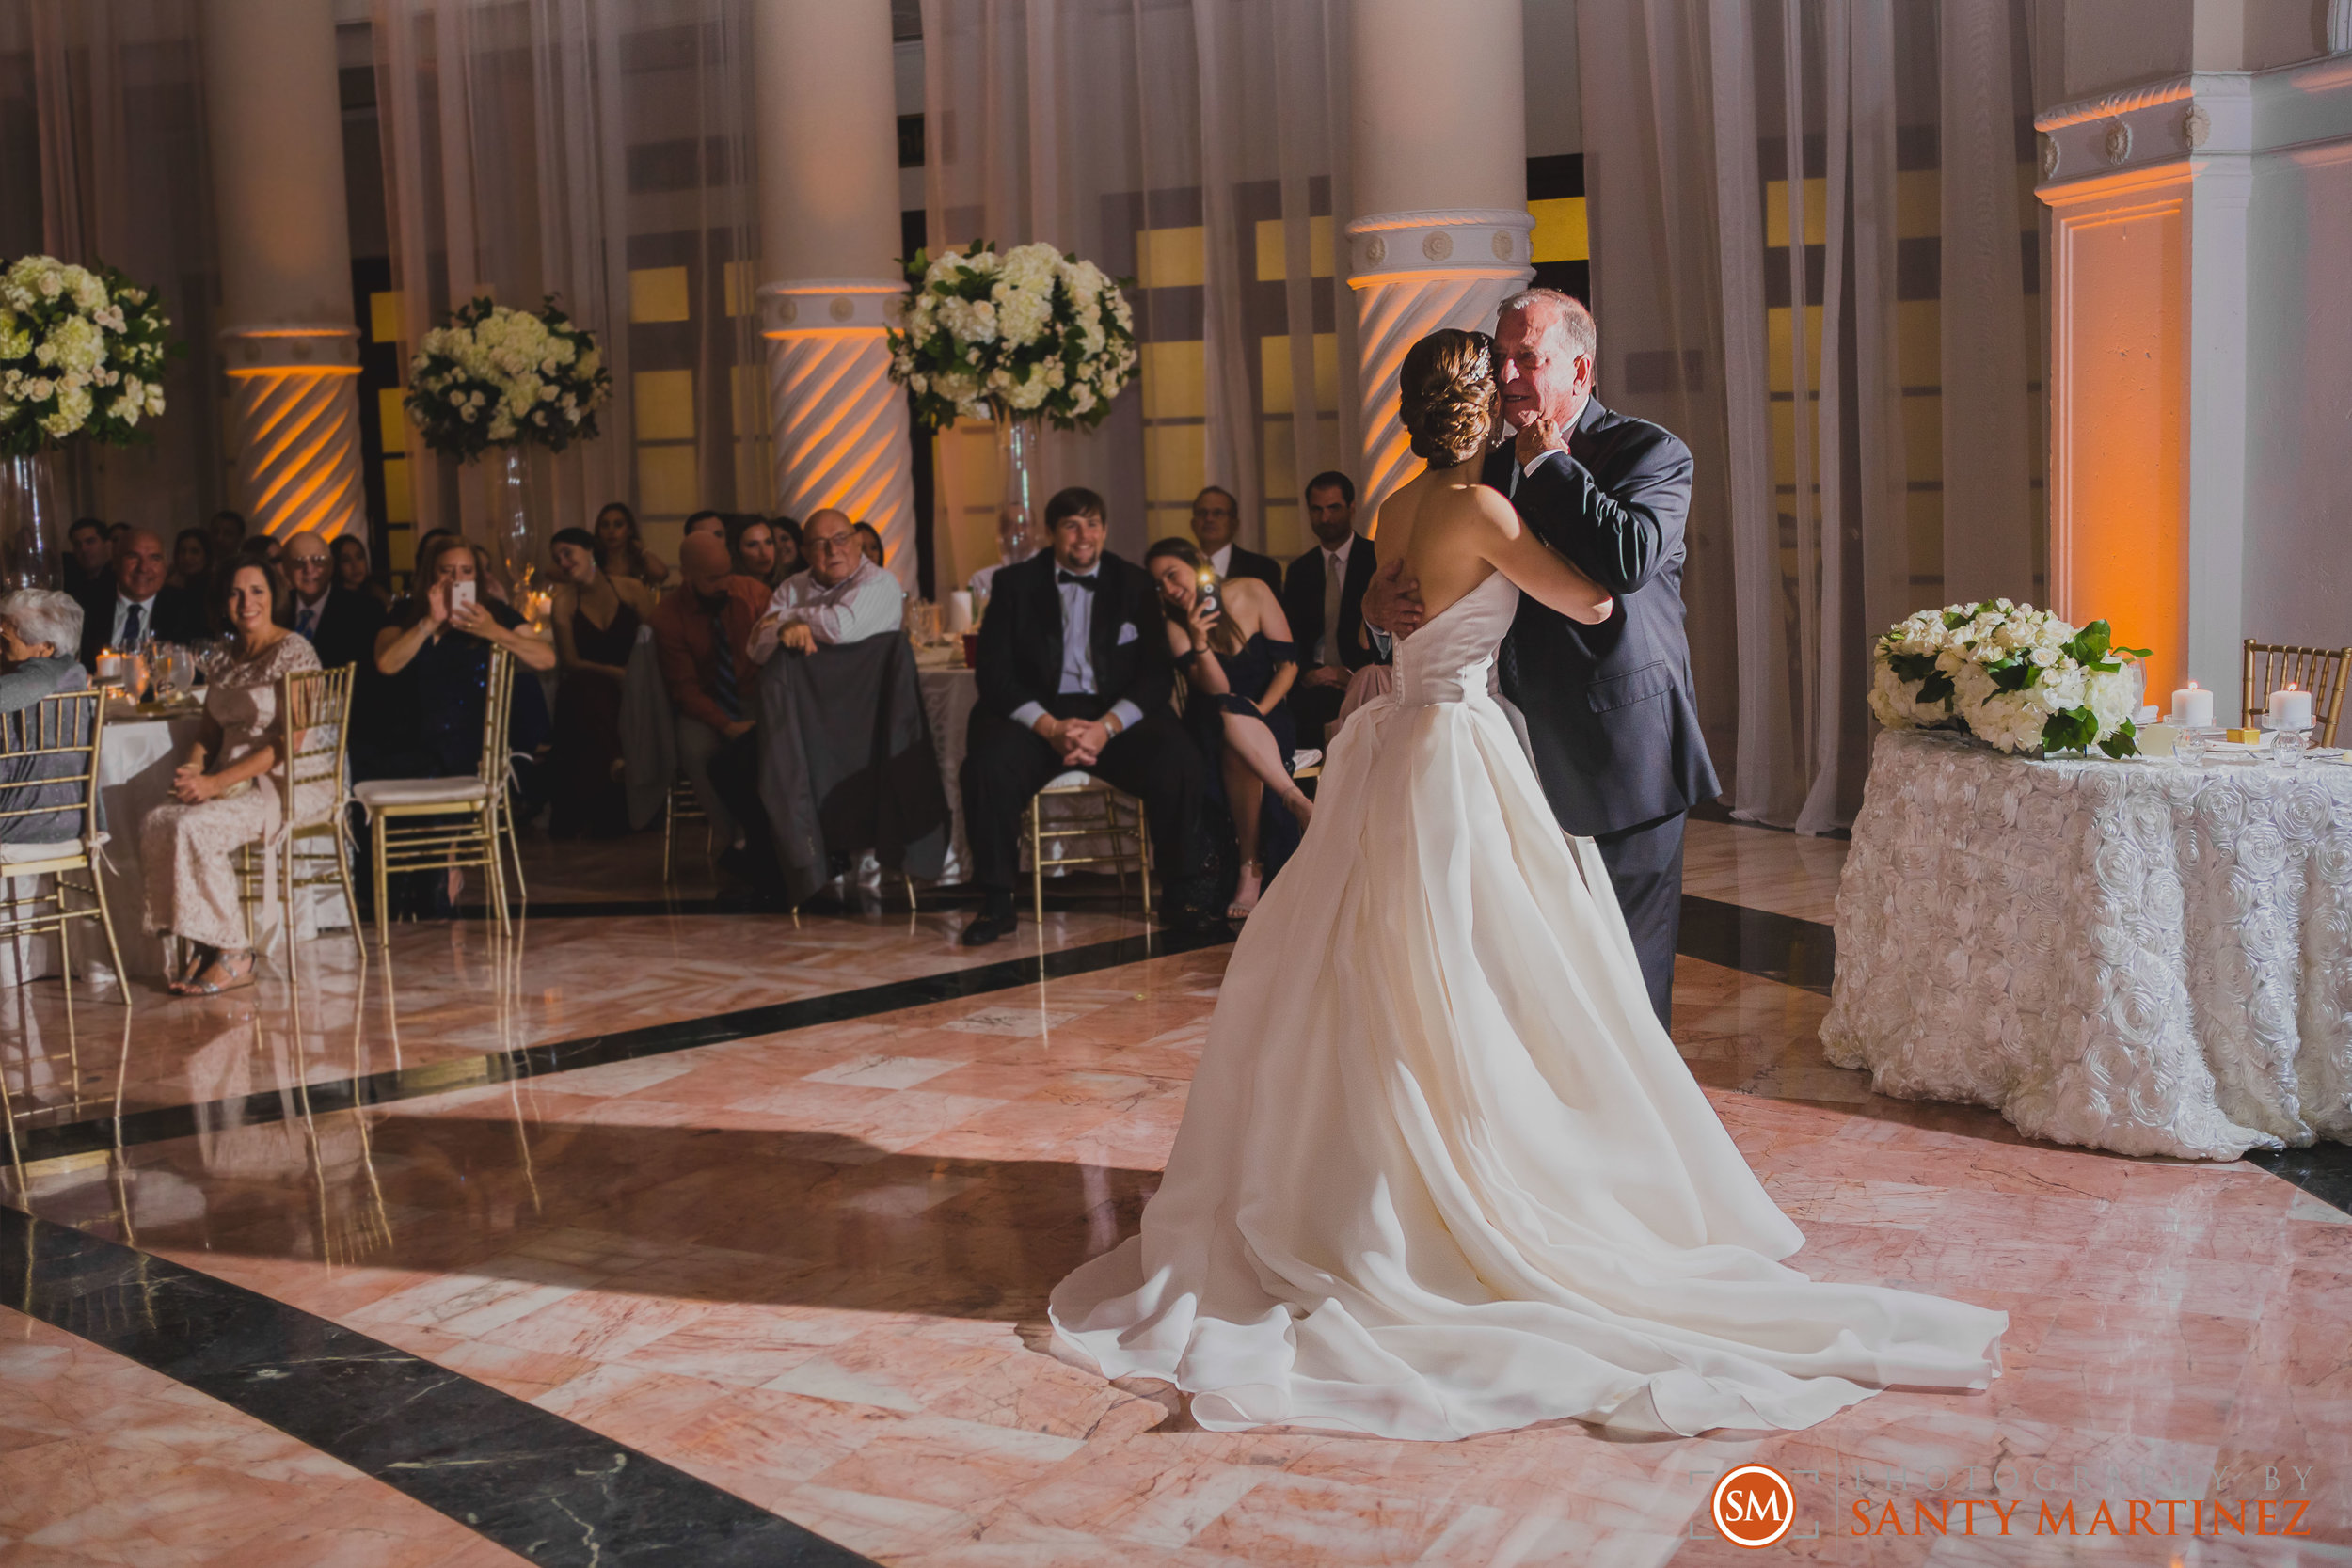 Wedding - Hotel Colonnade Coral Gables - Santy Martinez Photography-23.jpg